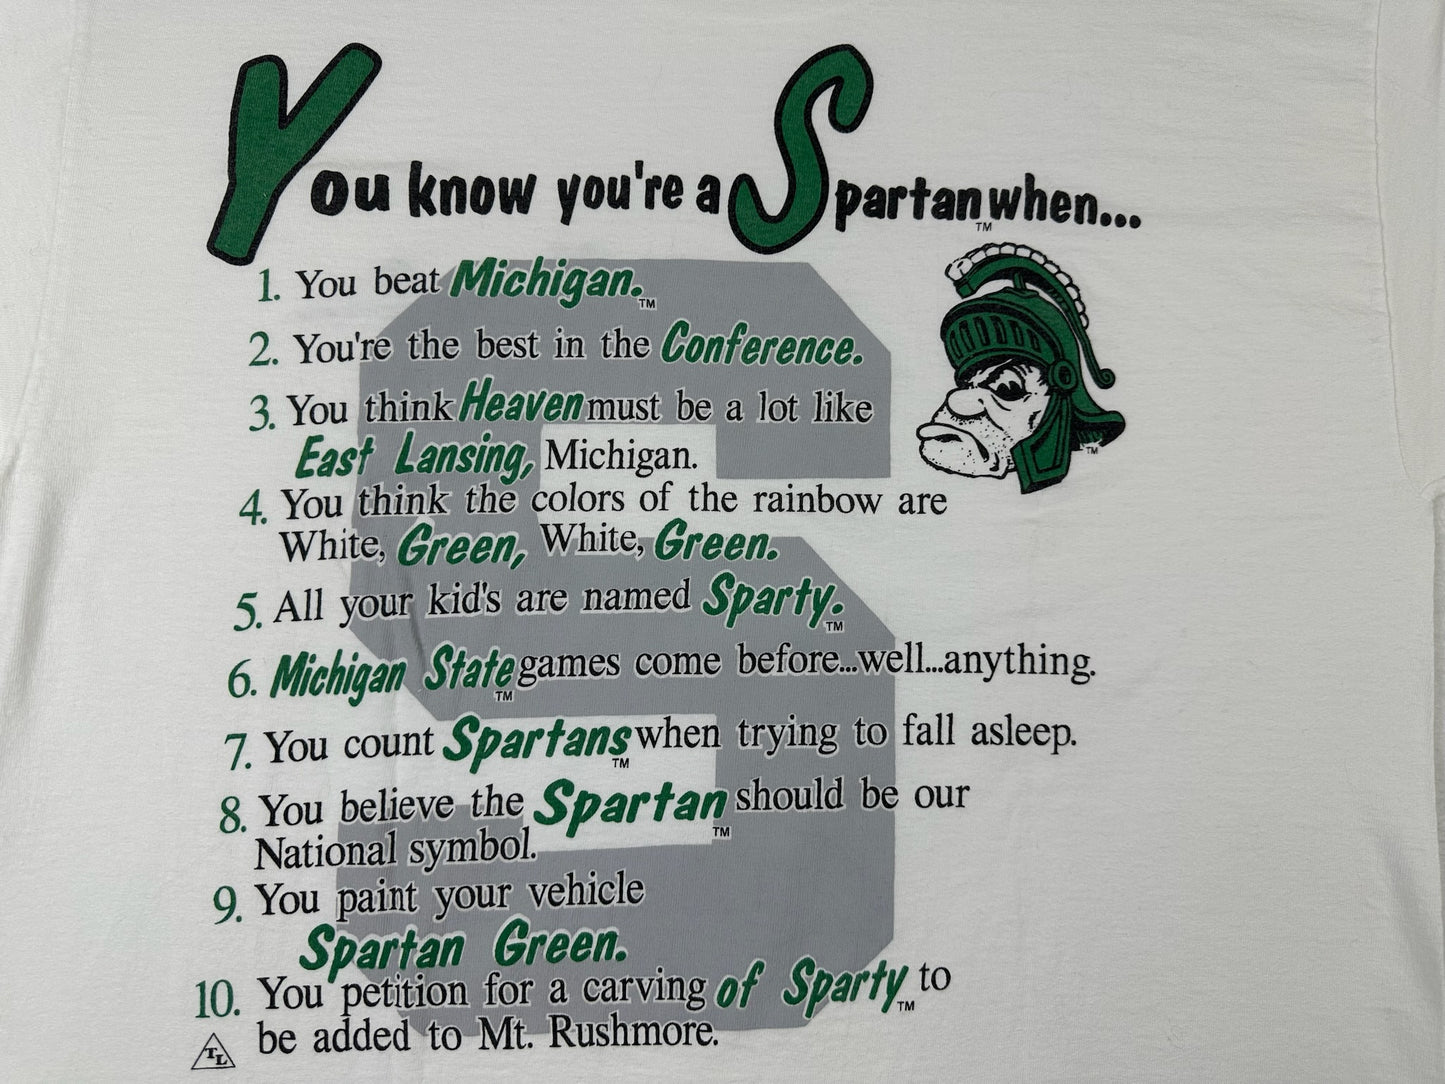 Michigan State "...you're a Spartan when..." T-Shirt